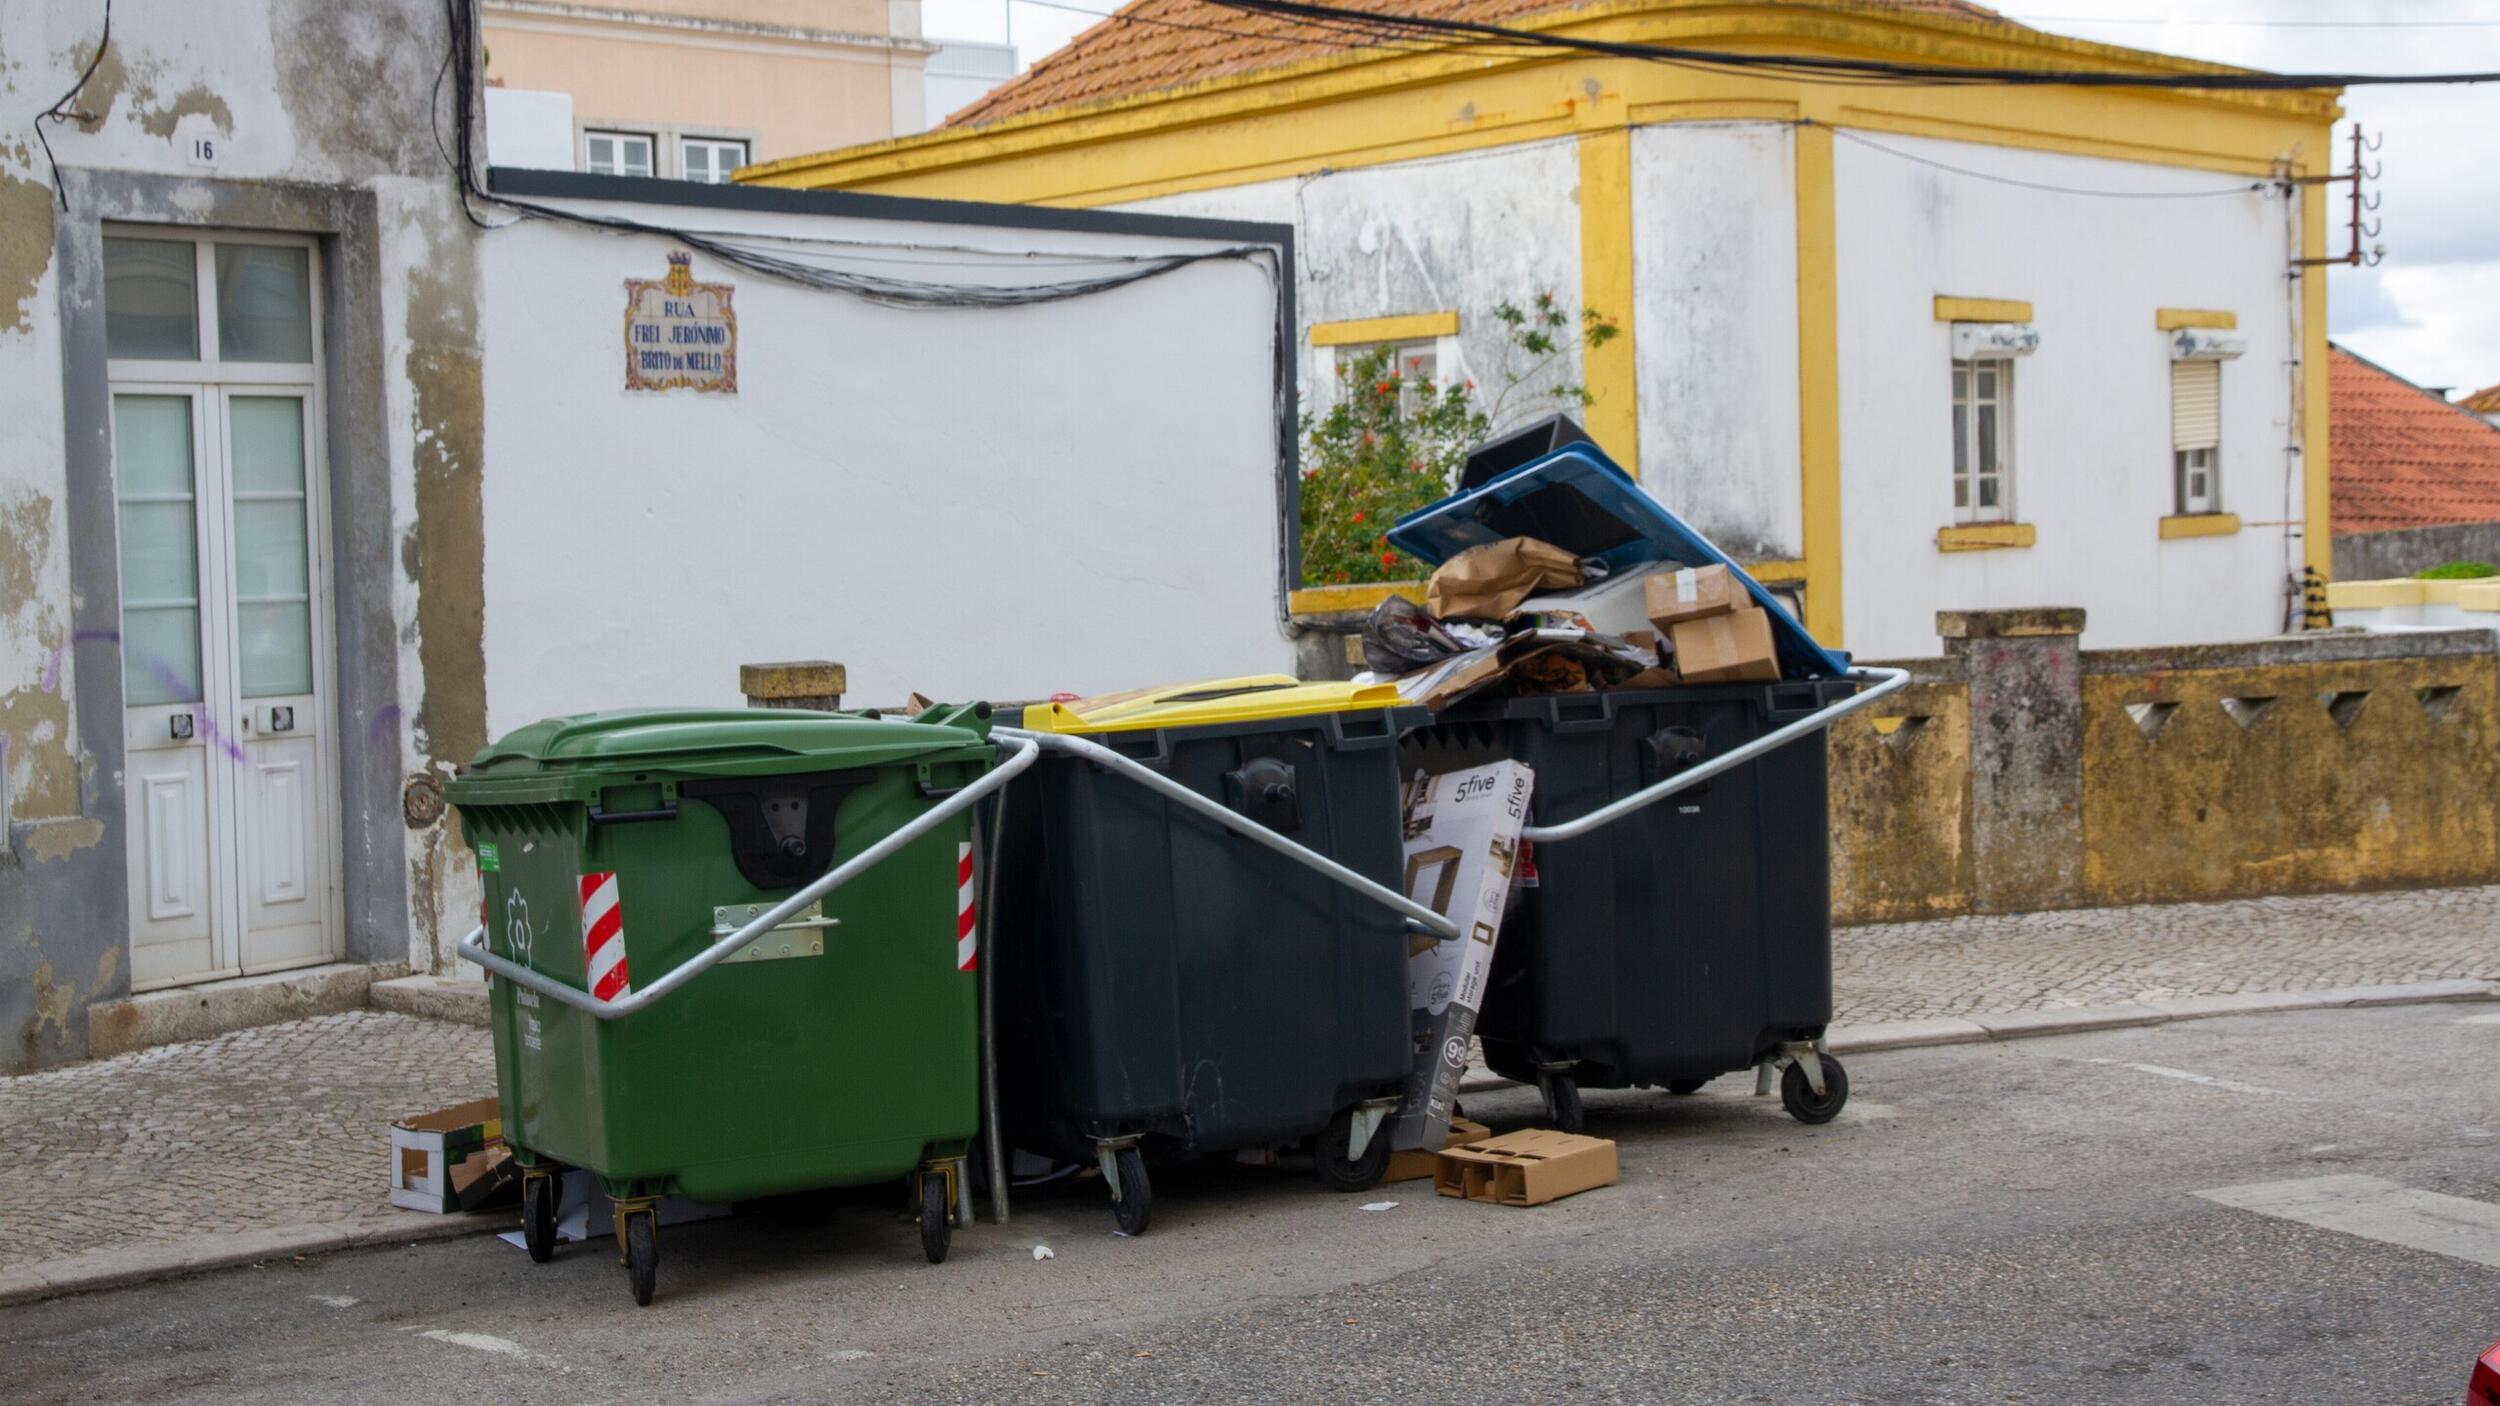 Greve na AMARSUL prevista até dia 3 dezembro afeta recolha de resíduos 